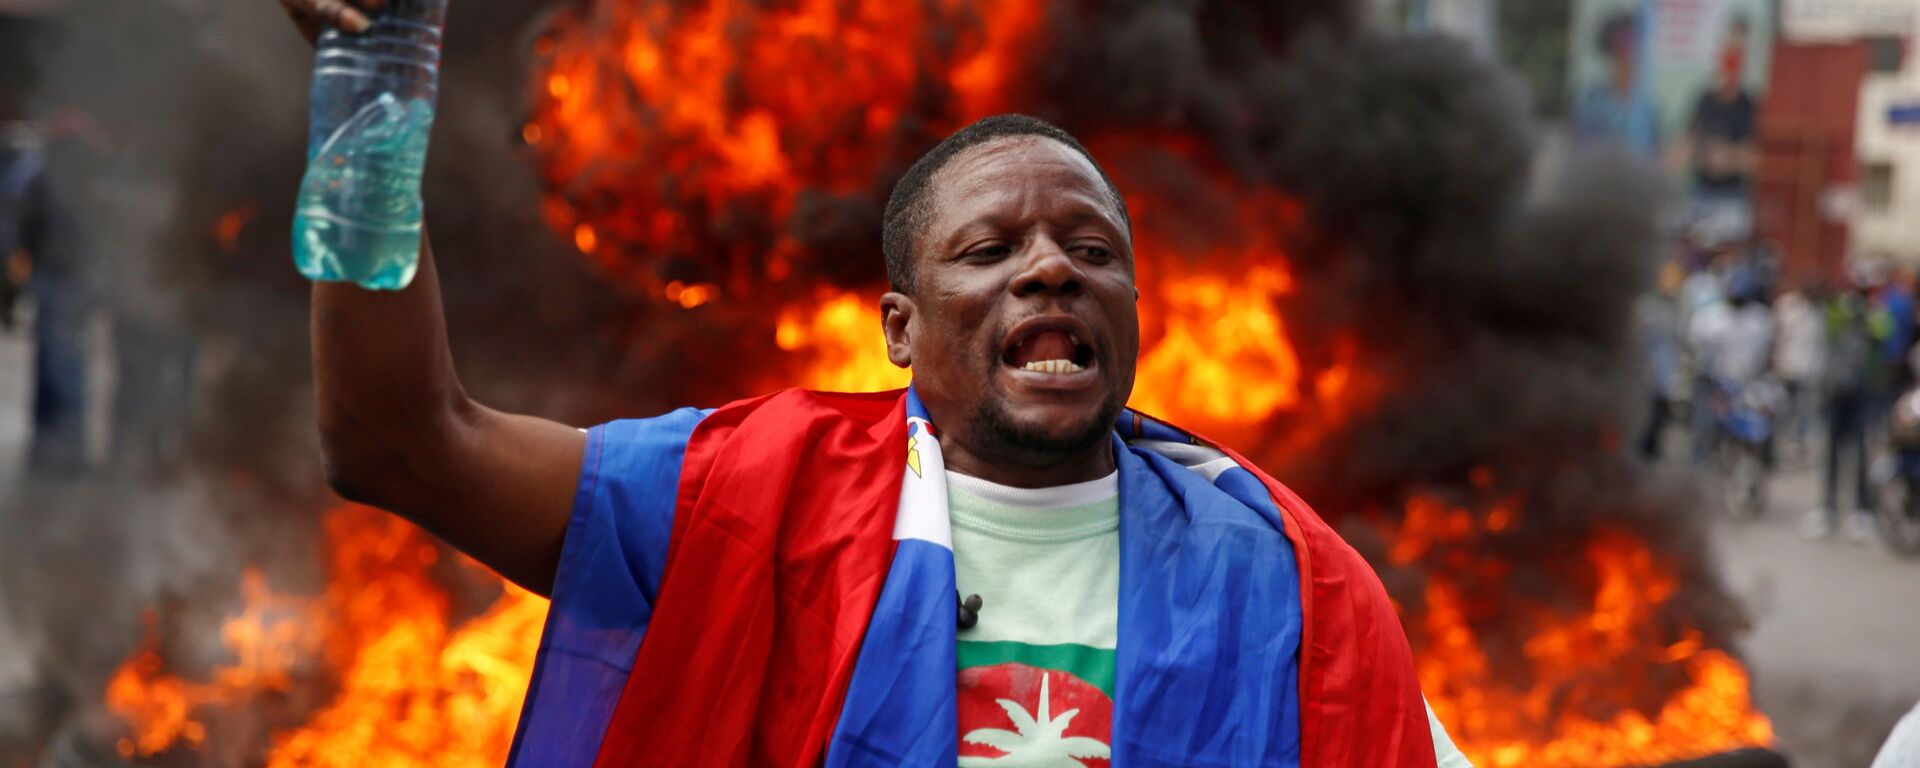 Un participante de protestas en Haití - Sputnik Mundo, 1920, 10.02.2021